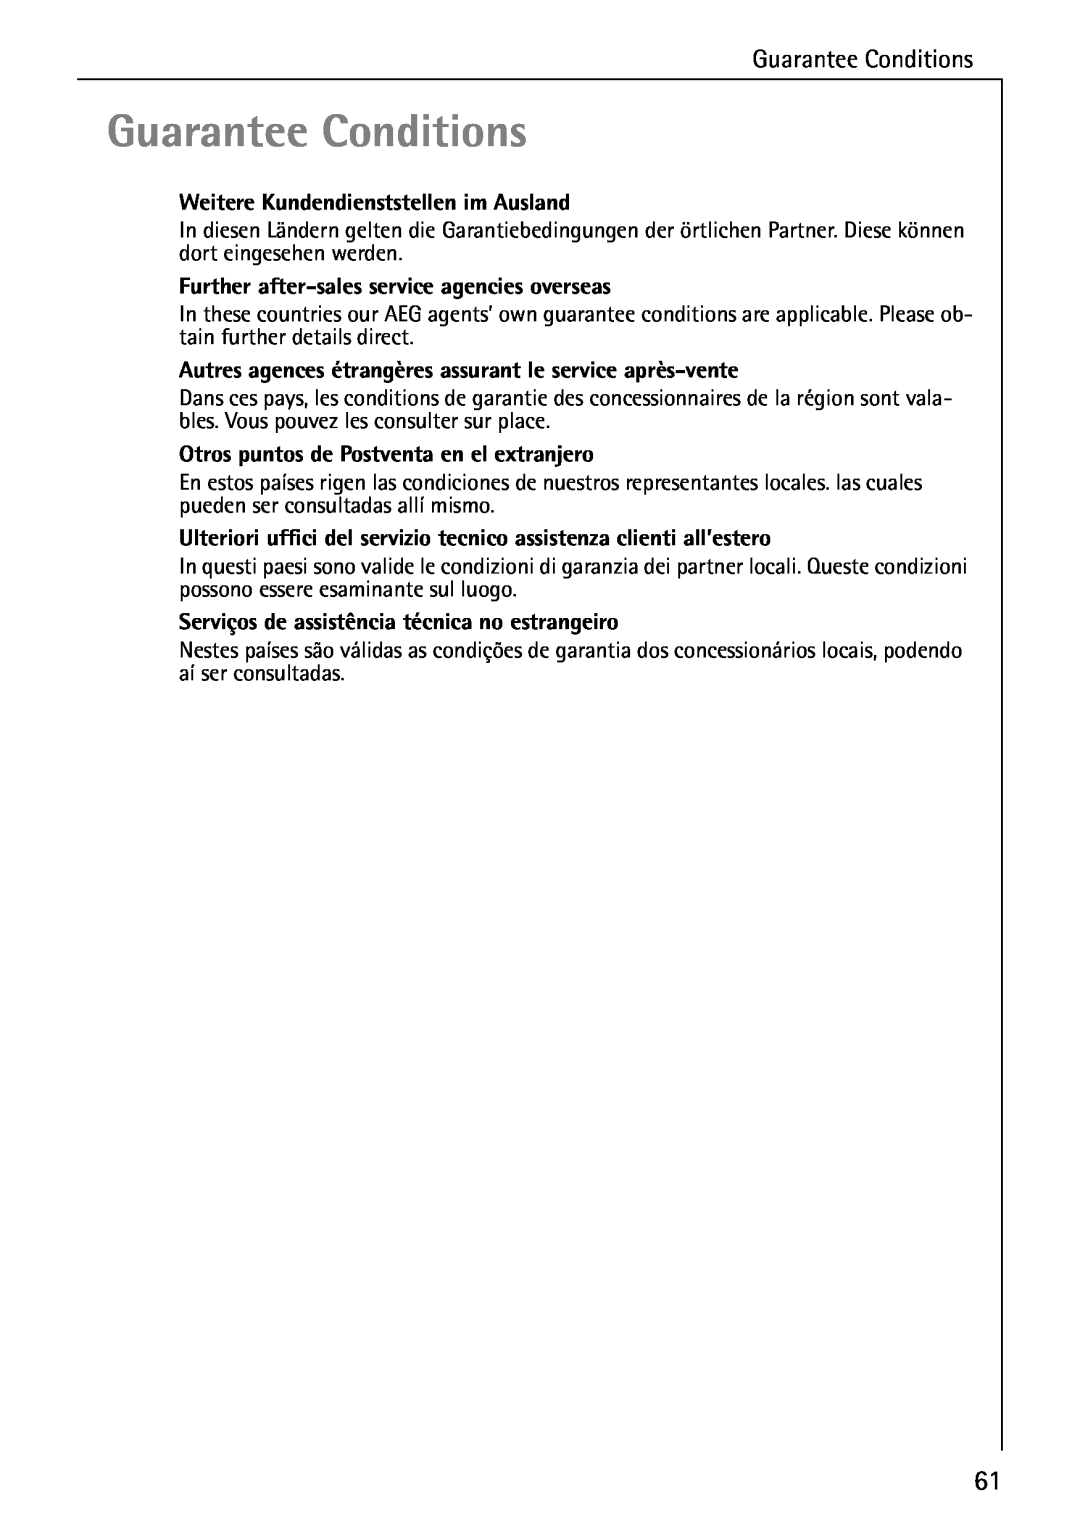 AEG E4100-1 manual Guarantee Conditions 